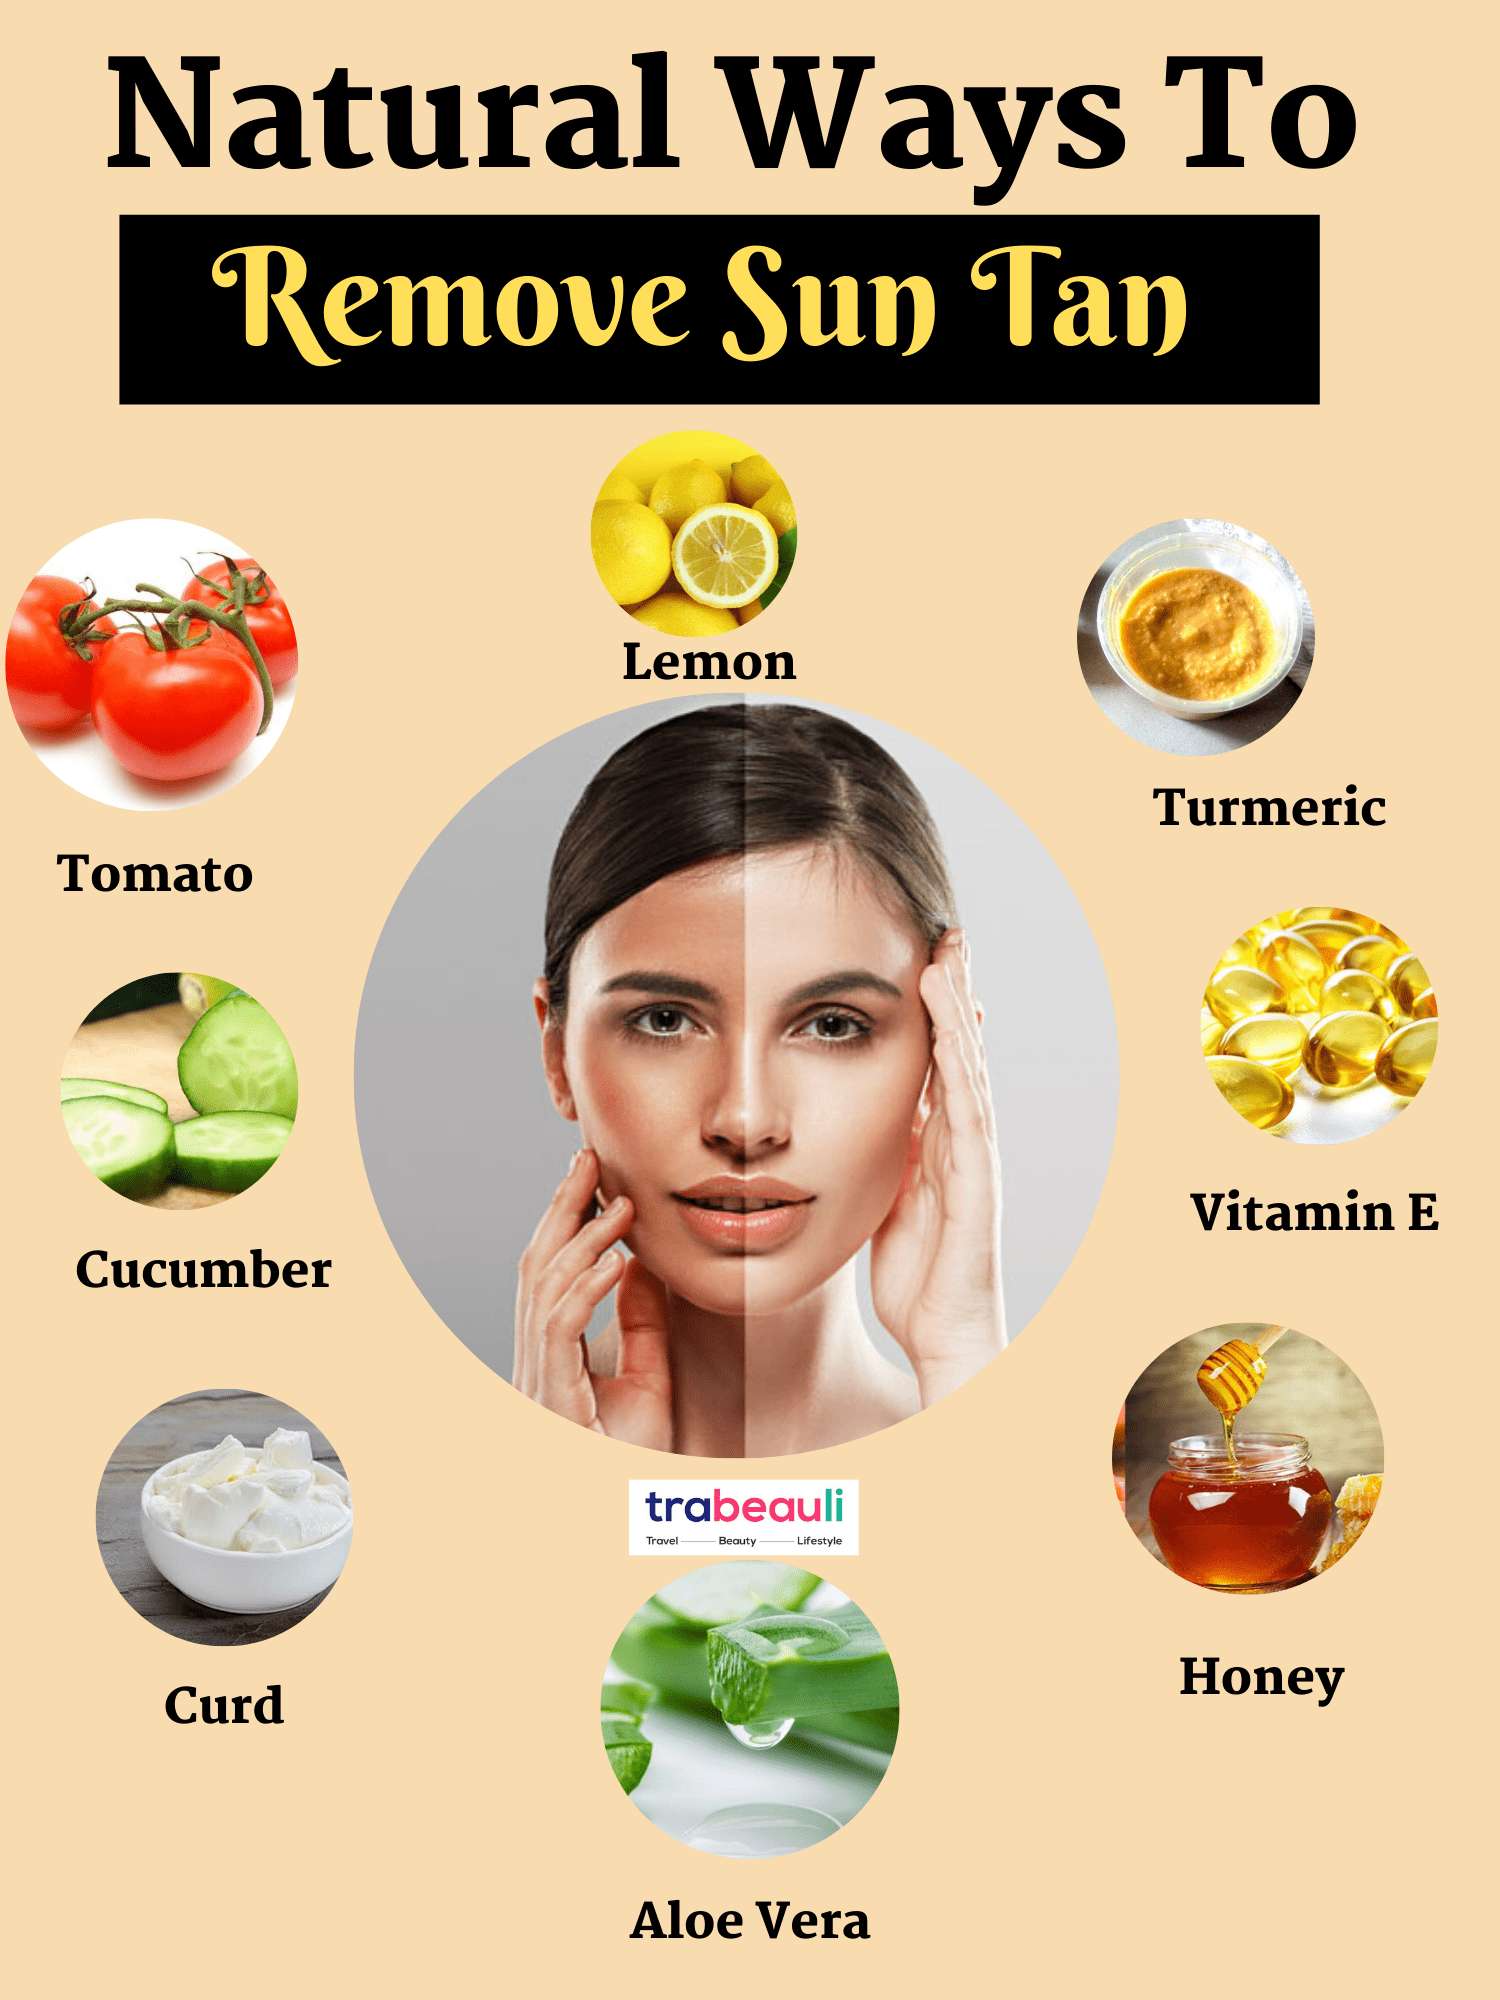 How to remove sun tan